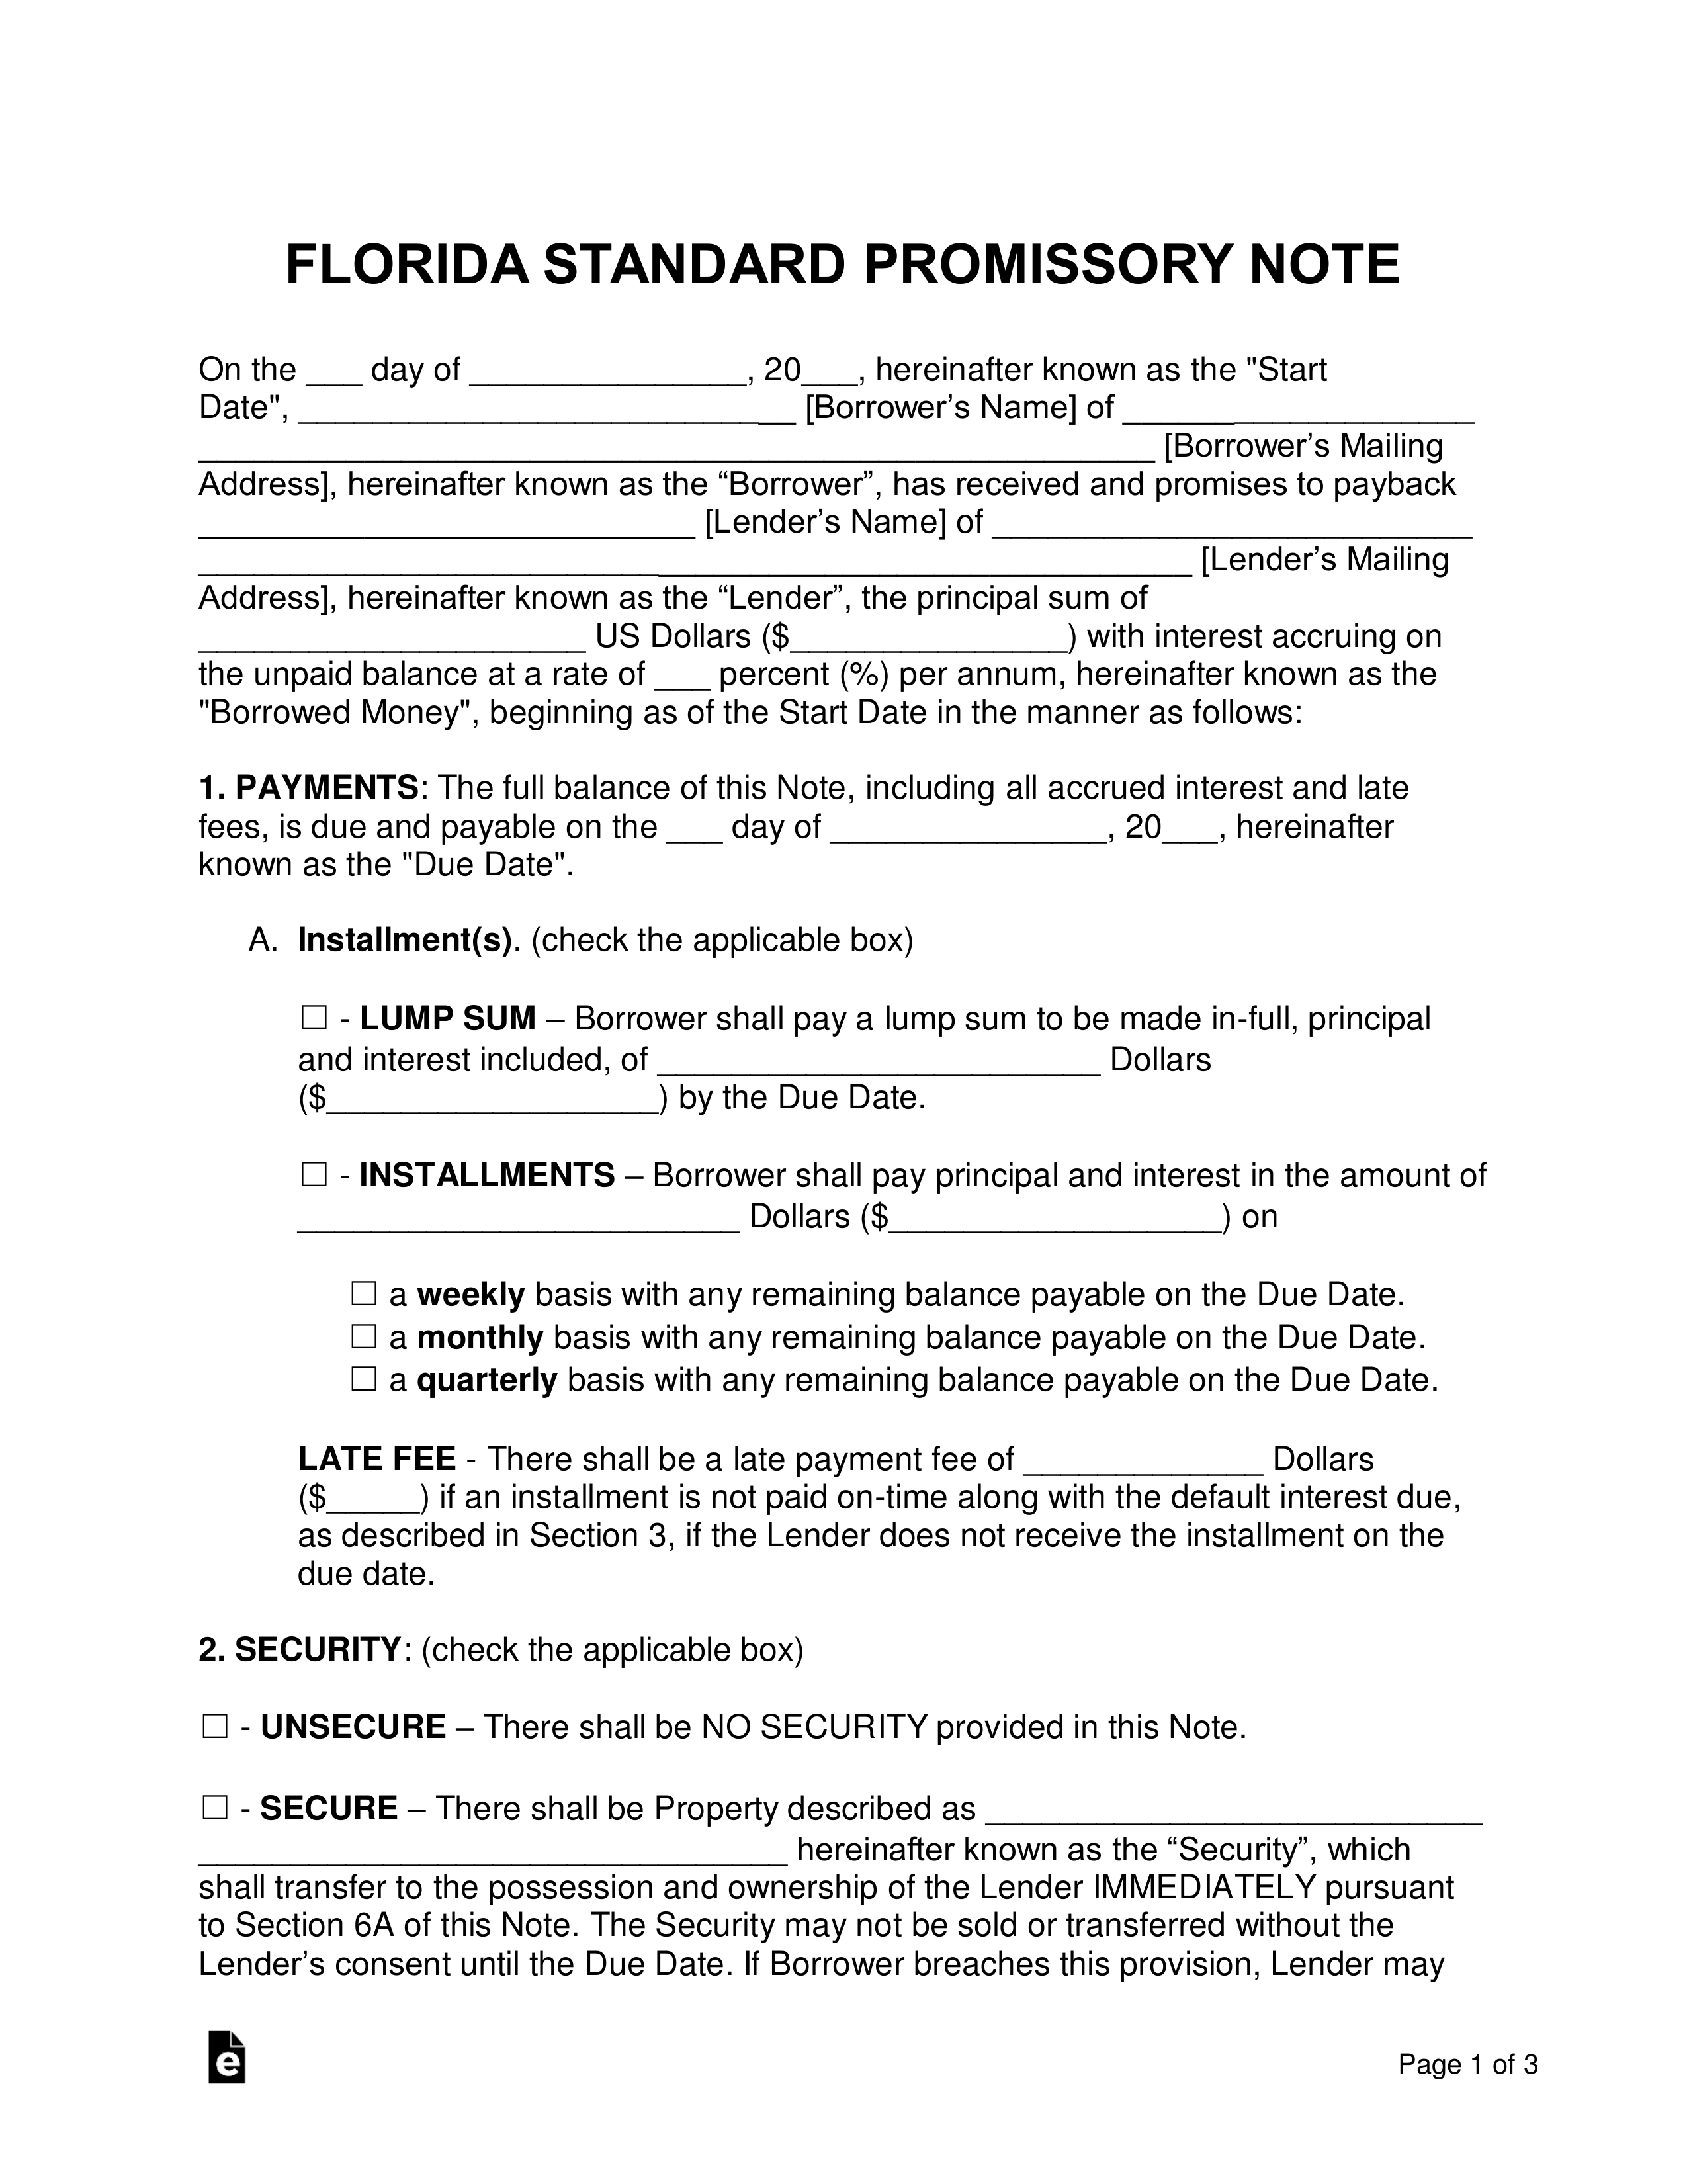 Florida Promissory Note Templates (2)